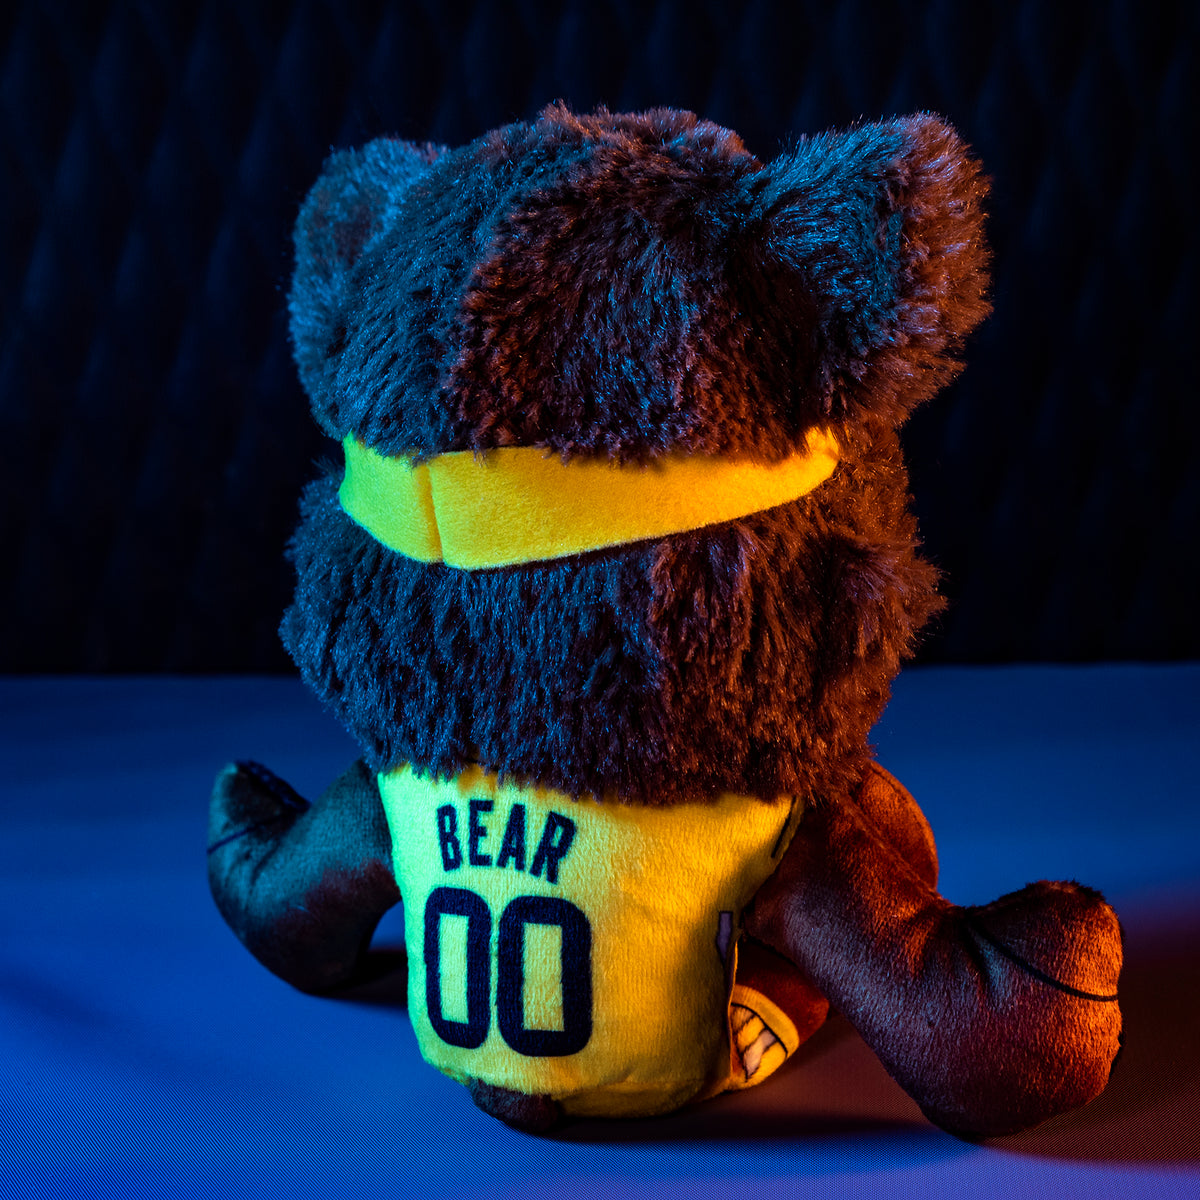 Utah Jazz Bear 8&quot; Mascot Kuricha Plush (Yellow Uniform)